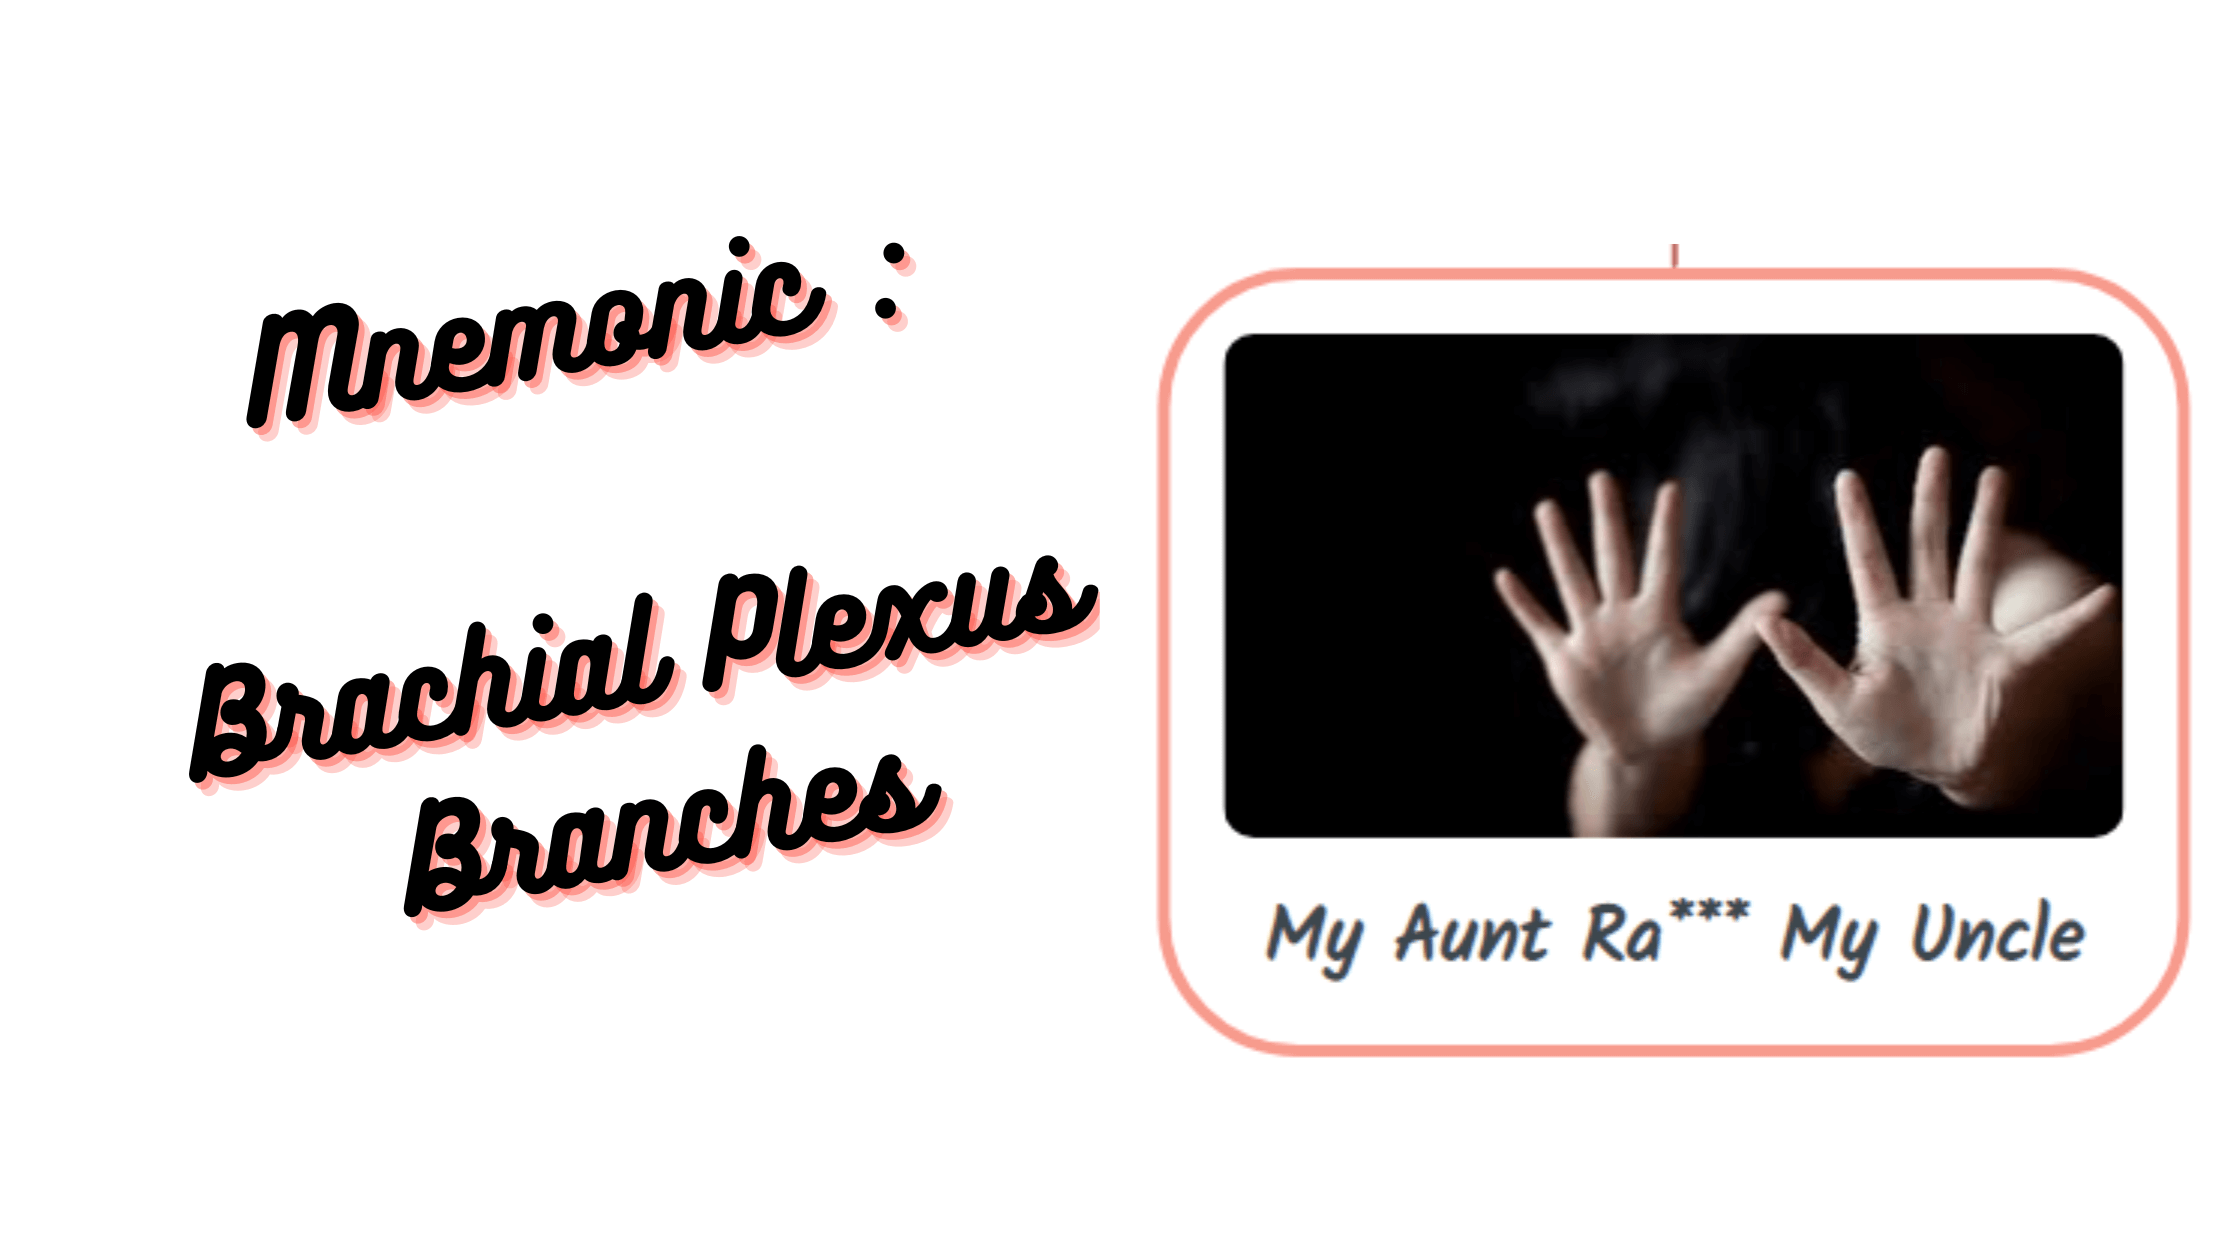 Mnemonic _ Brachial Plexus Branches Medical notes NExT Medical Exit Test